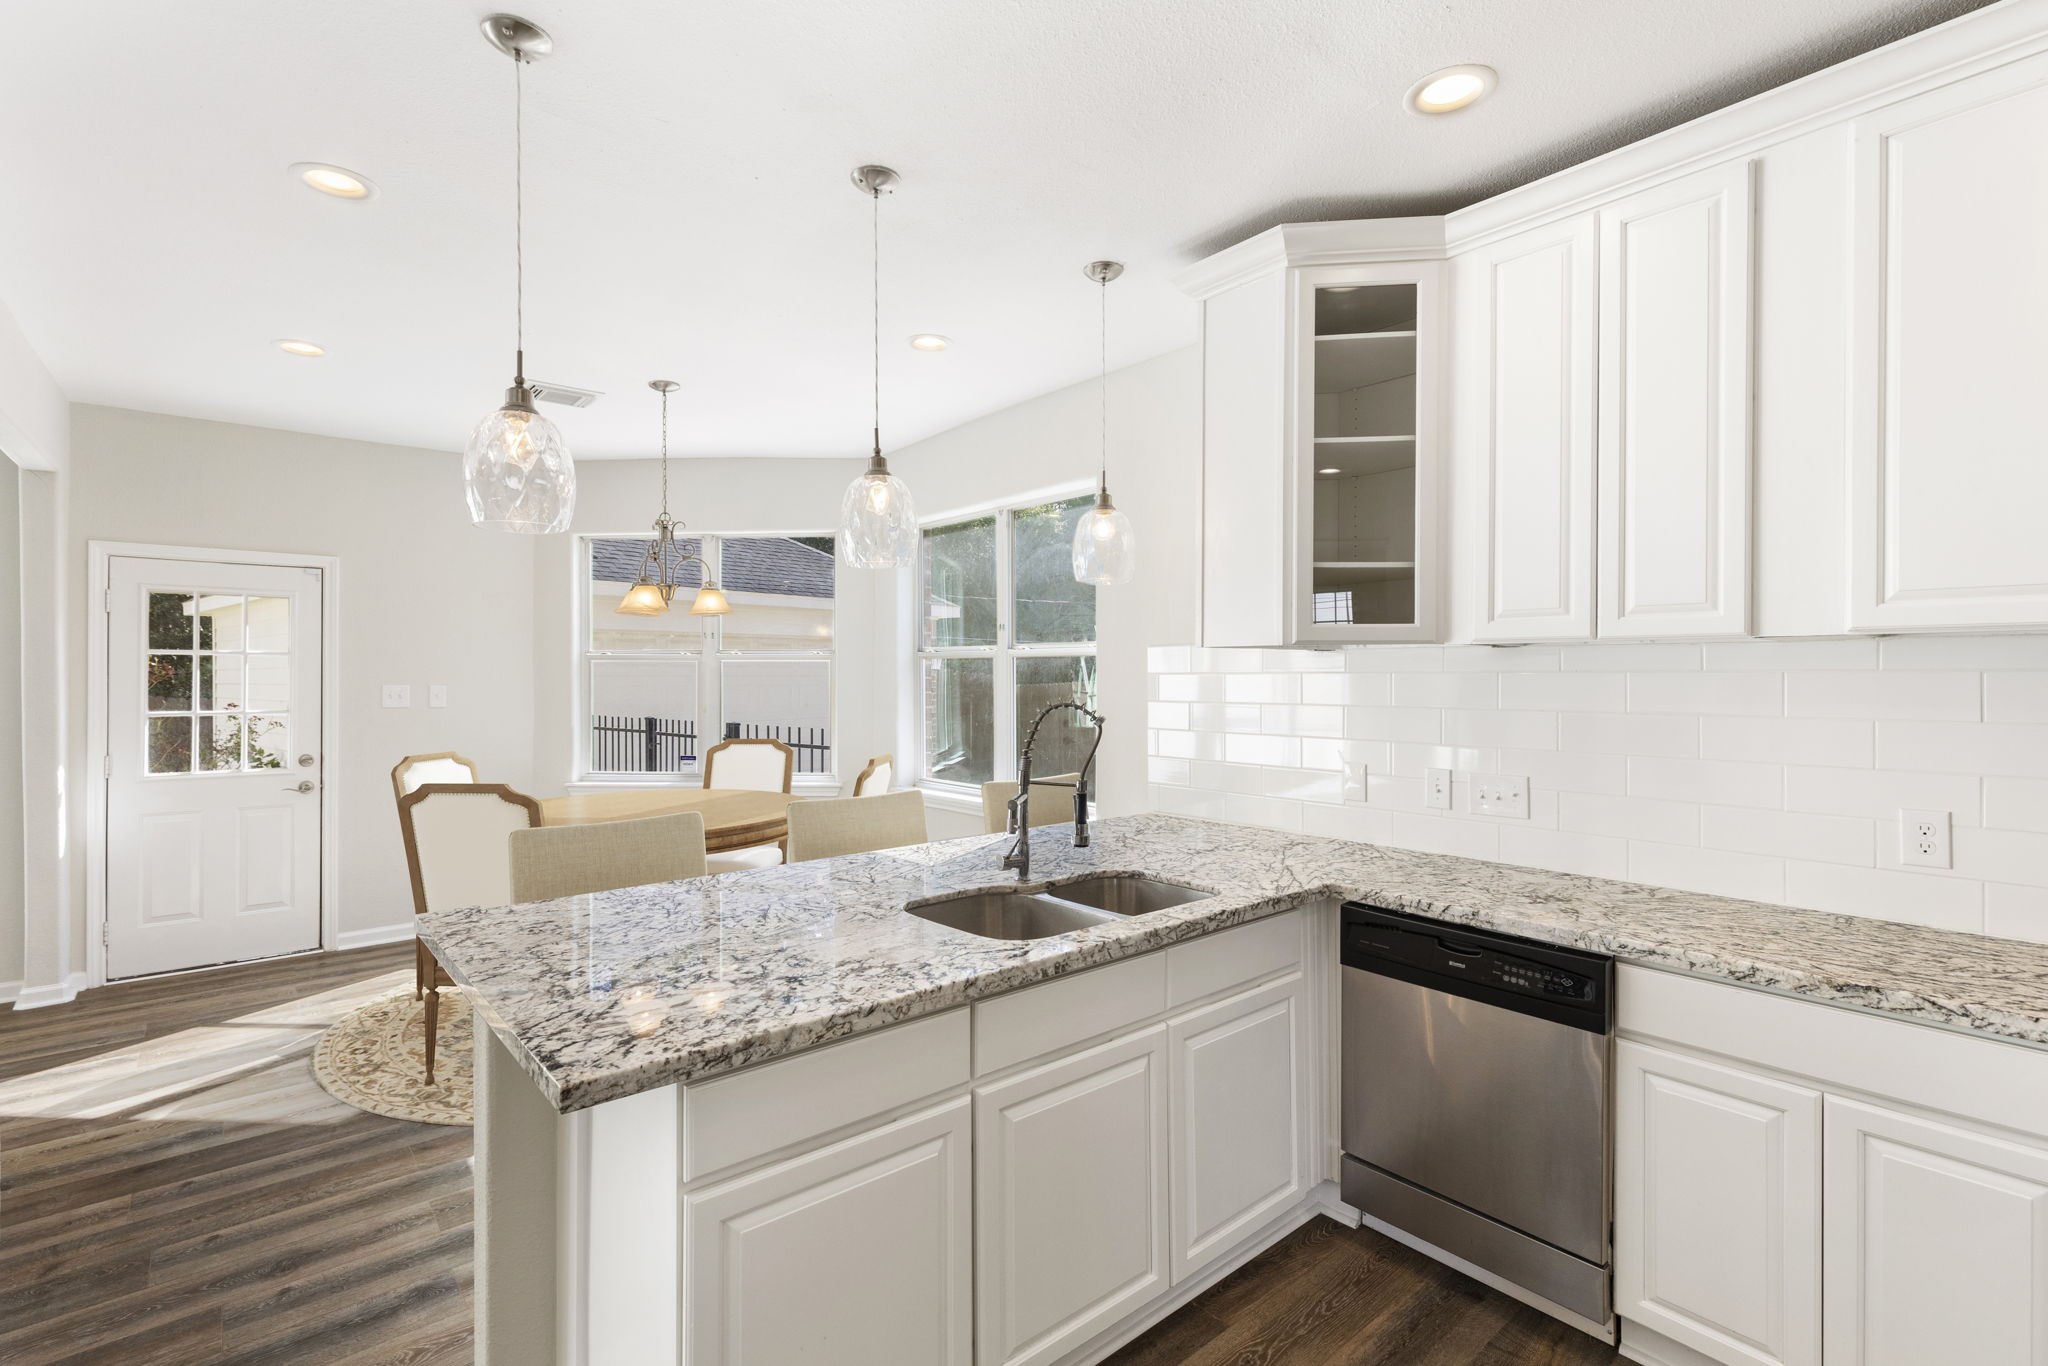 This dream kitchen offers stylish granite countertops with white subway tiled backsplash, 42